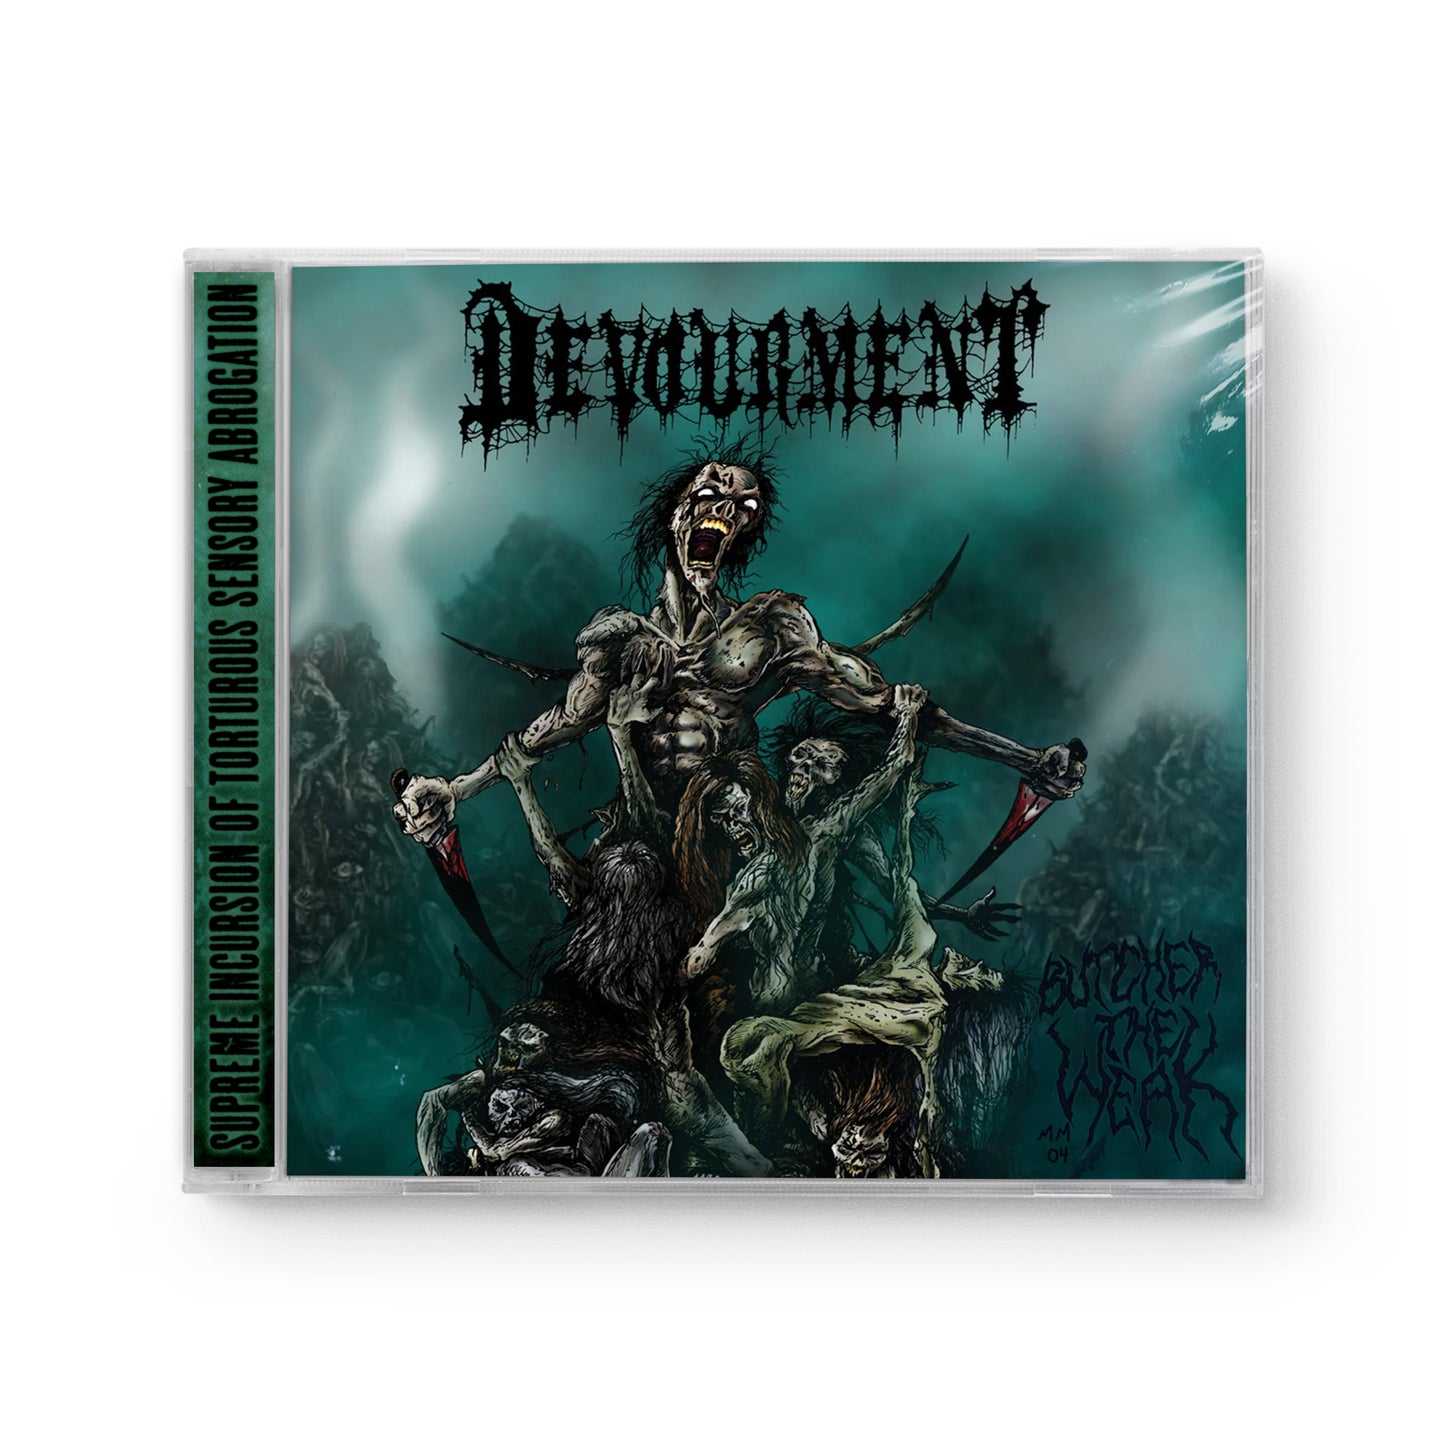 Devourment "Butcher The Weak" CD